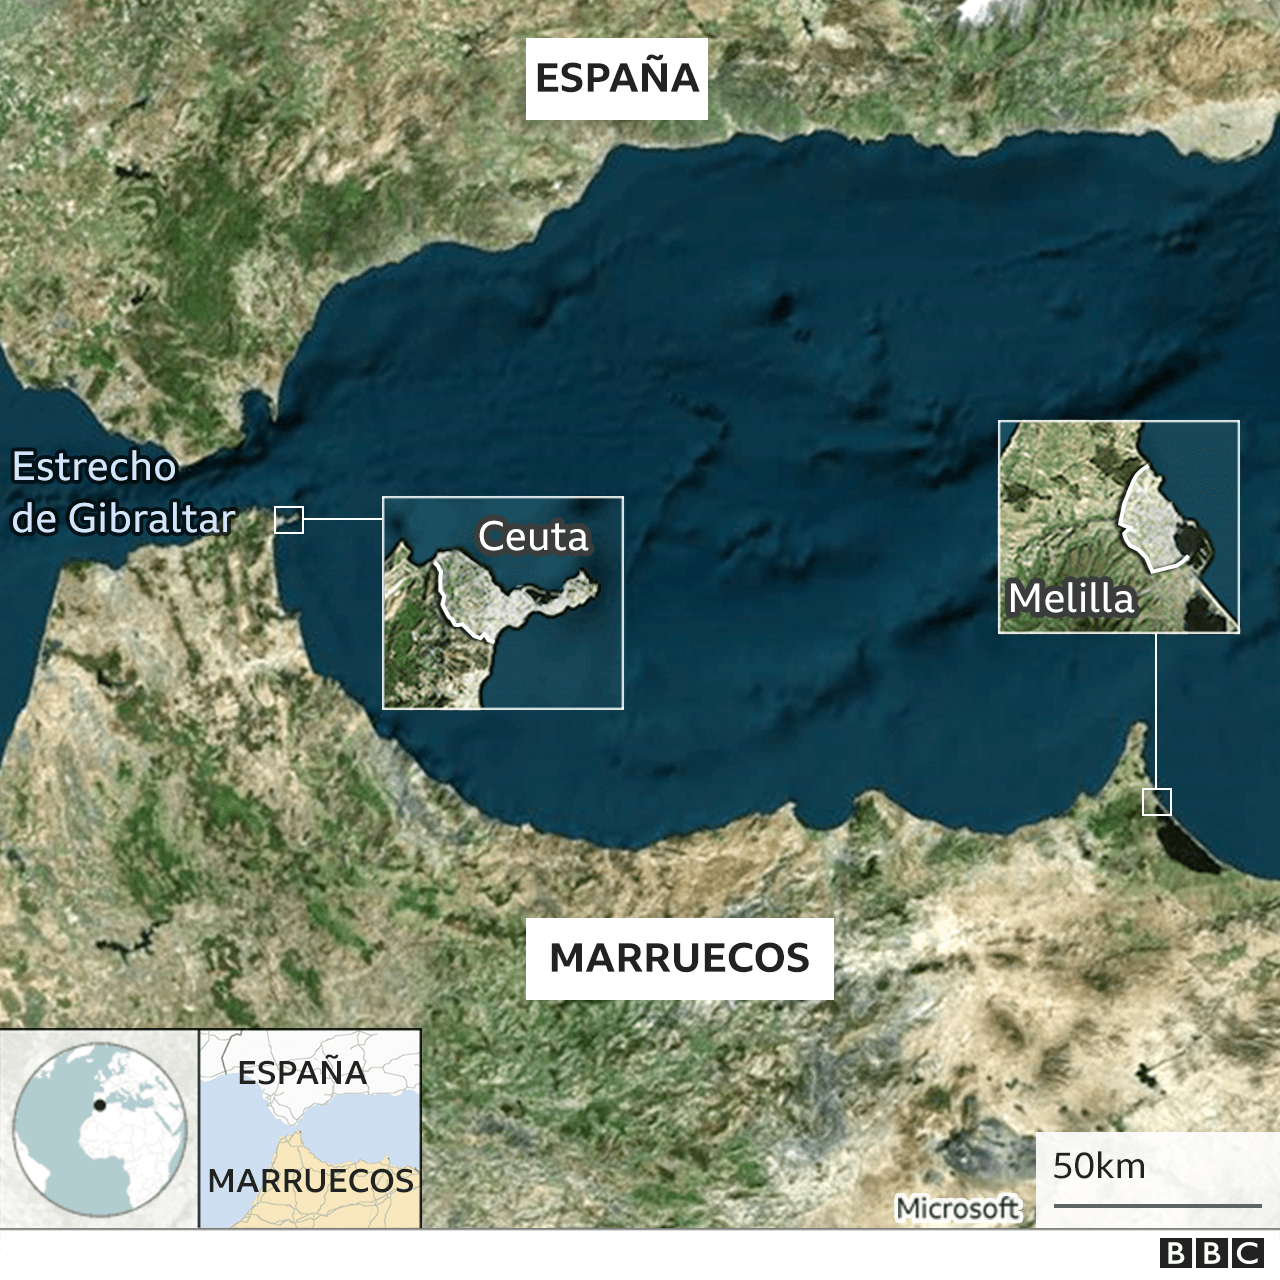 Por qué Ceuta y Melilla pertenecen a España si están en África - BBC News Mundo